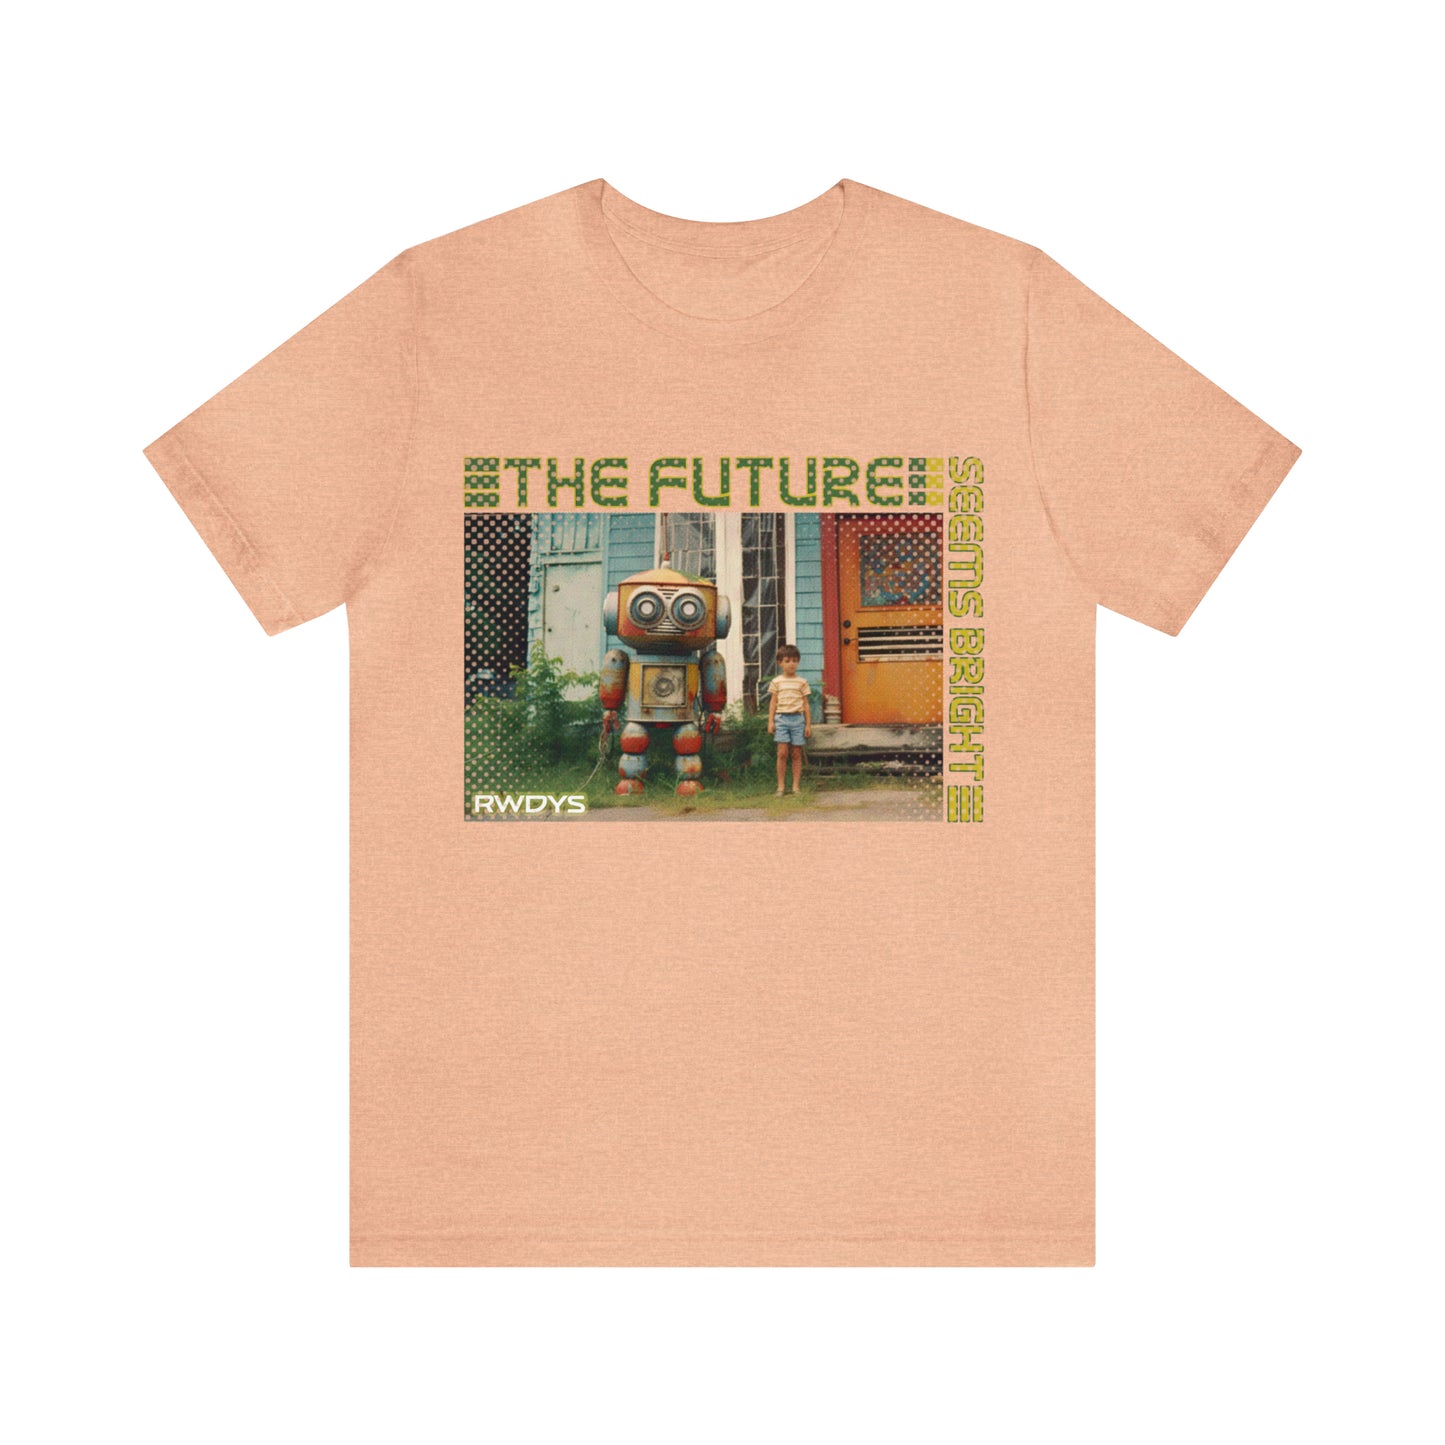 The Future Seems Bright - Rowdy's Clothing Co. T-Shirt